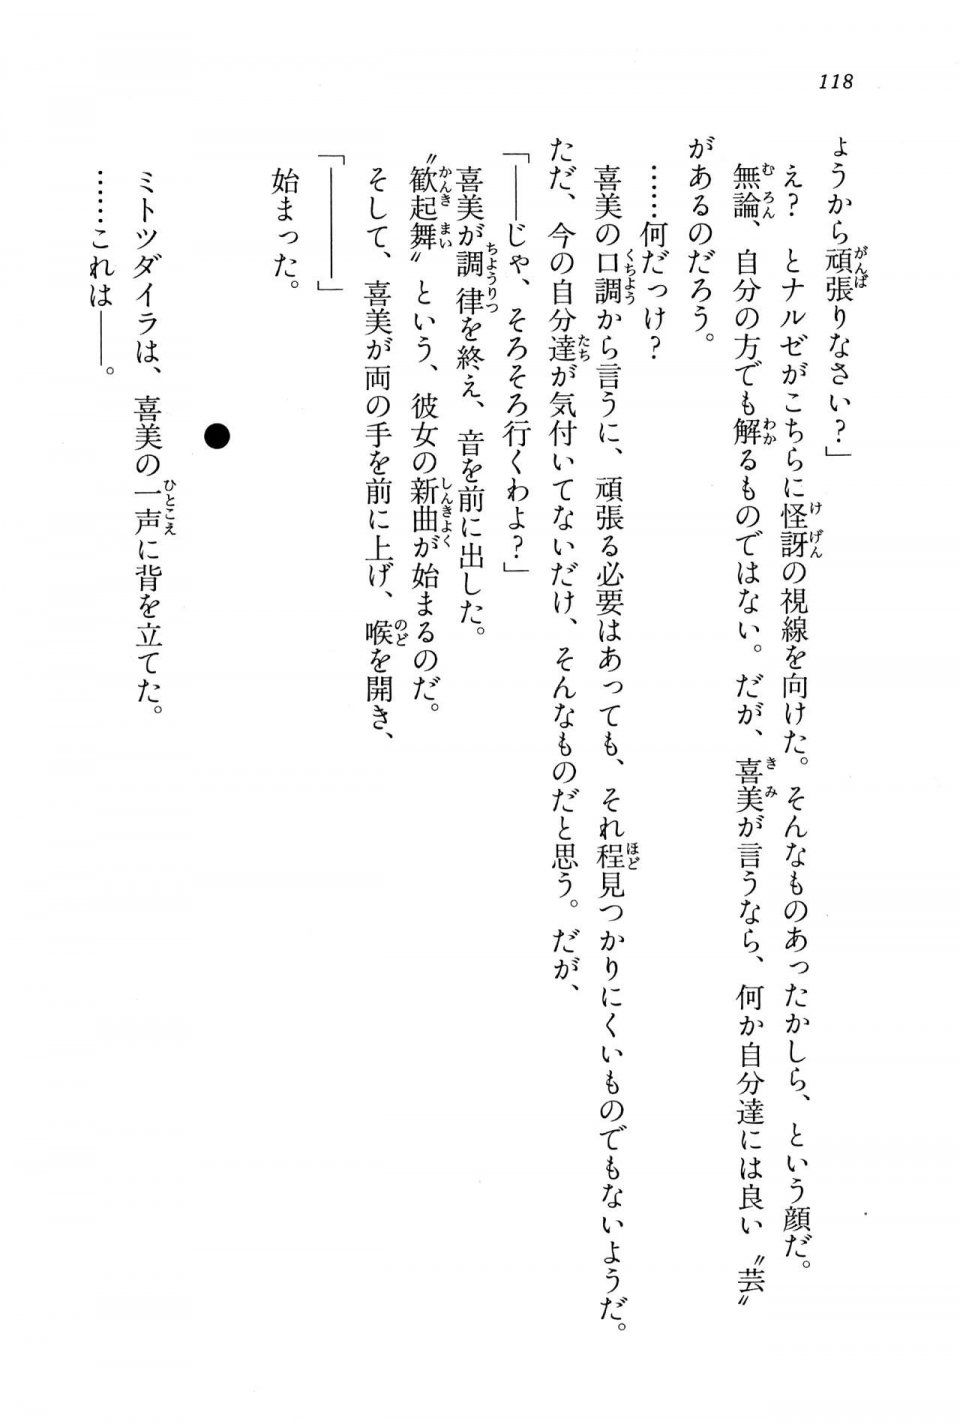 Kyoukai Senjou no Horizon BD Special Mininovel Vol 7(4A) - Photo #122